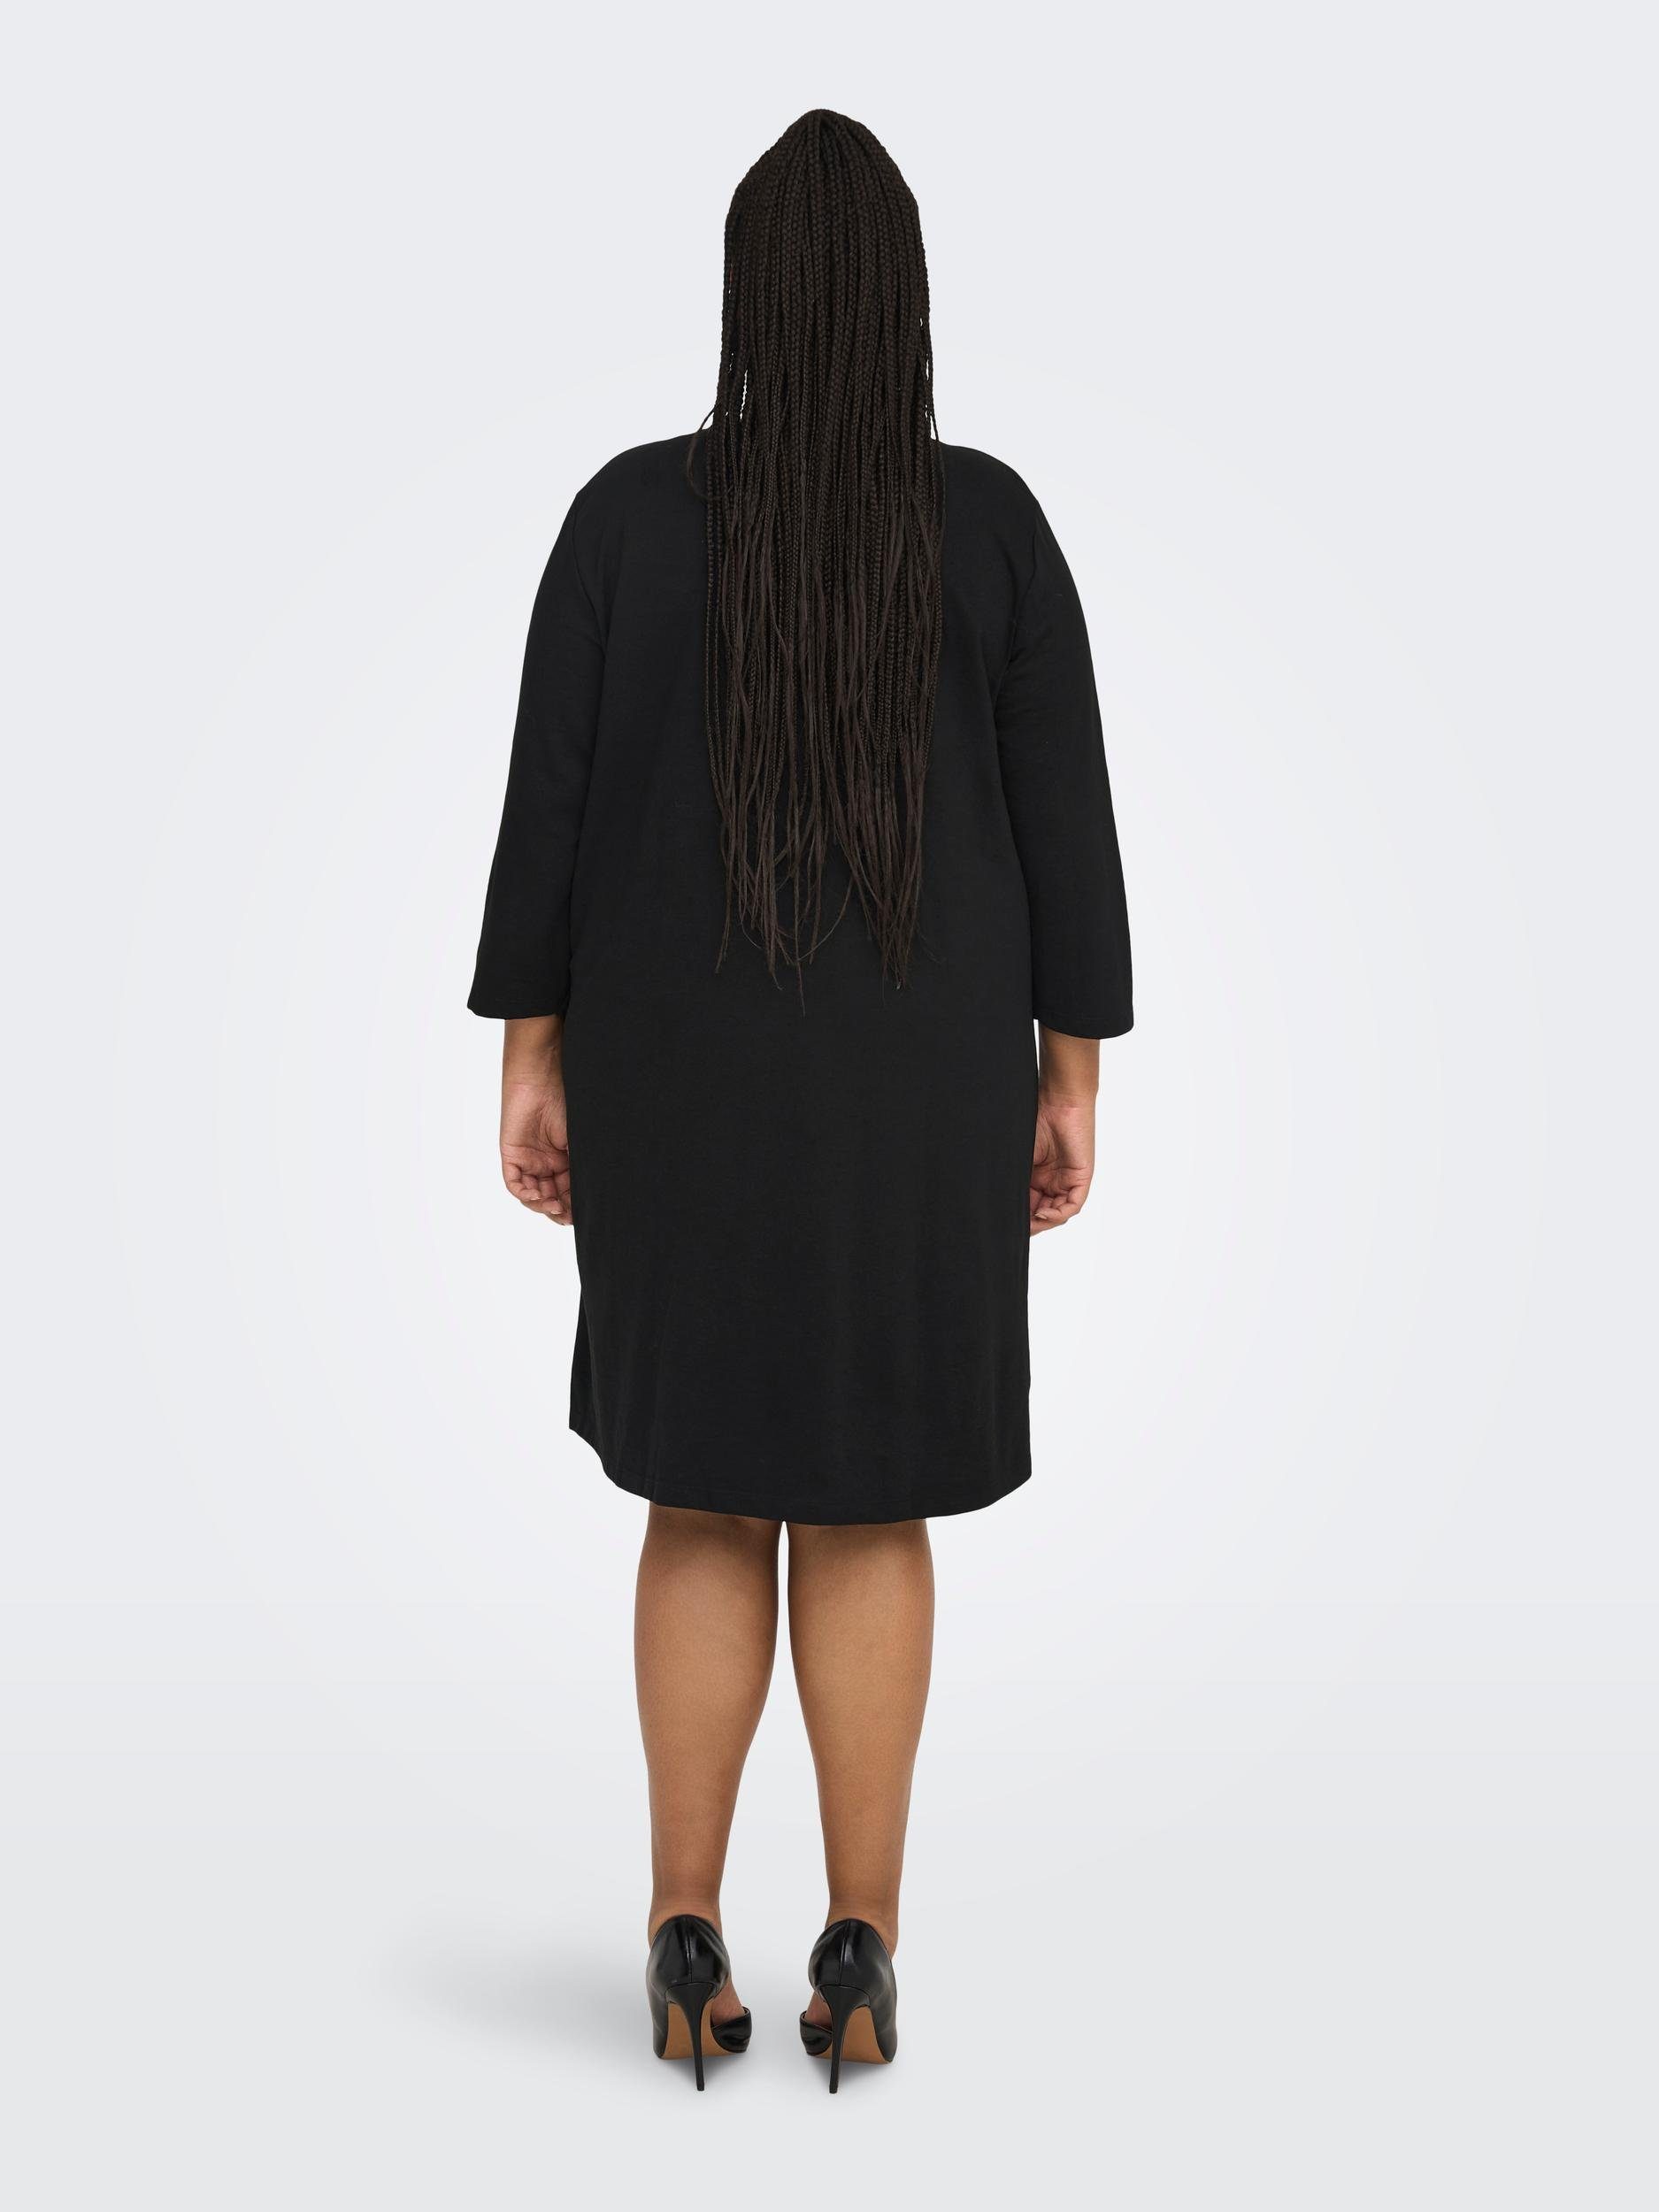 Jerseykleid JRS Detail:SILVER CARMAKOMA ONLY BLING CARGENEVA 3/4 Black DRESS SEQUINS